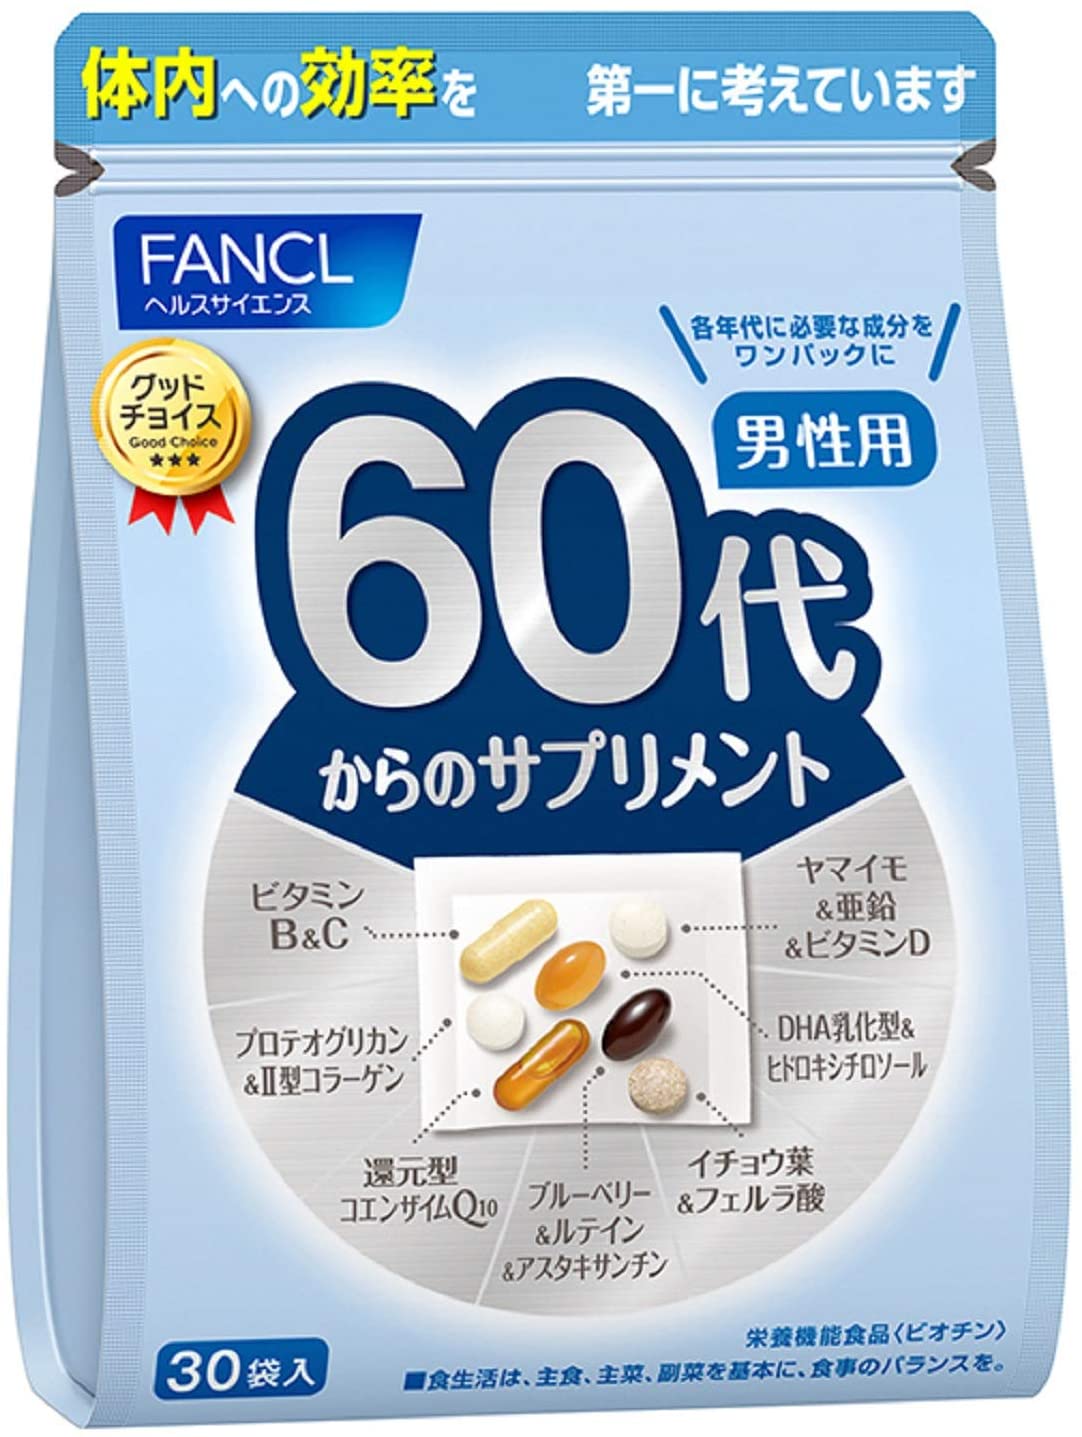 Витамины для мужчин Fancl 60+, 30 пакетиков по 7 таблеток